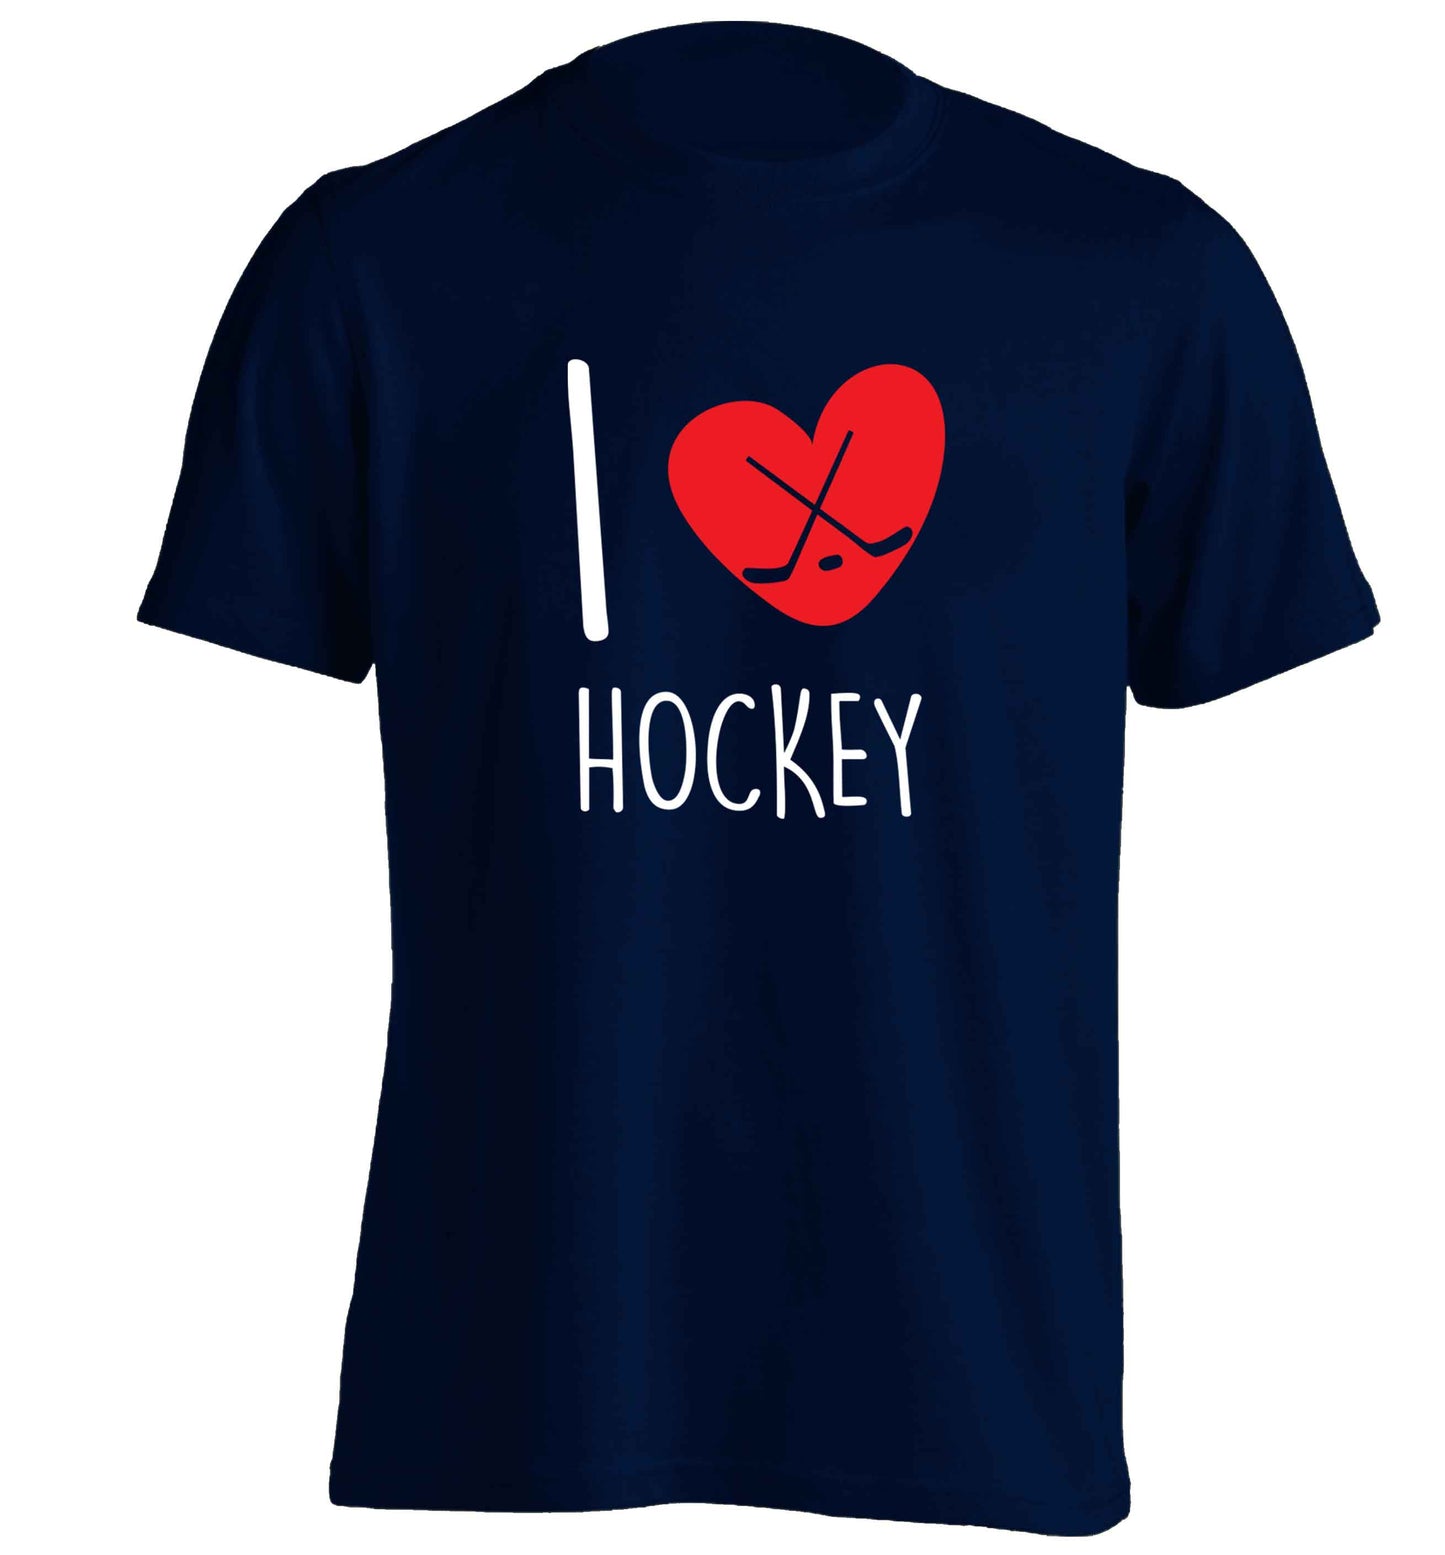 I love hockey adults unisex navy Tshirt 2XL